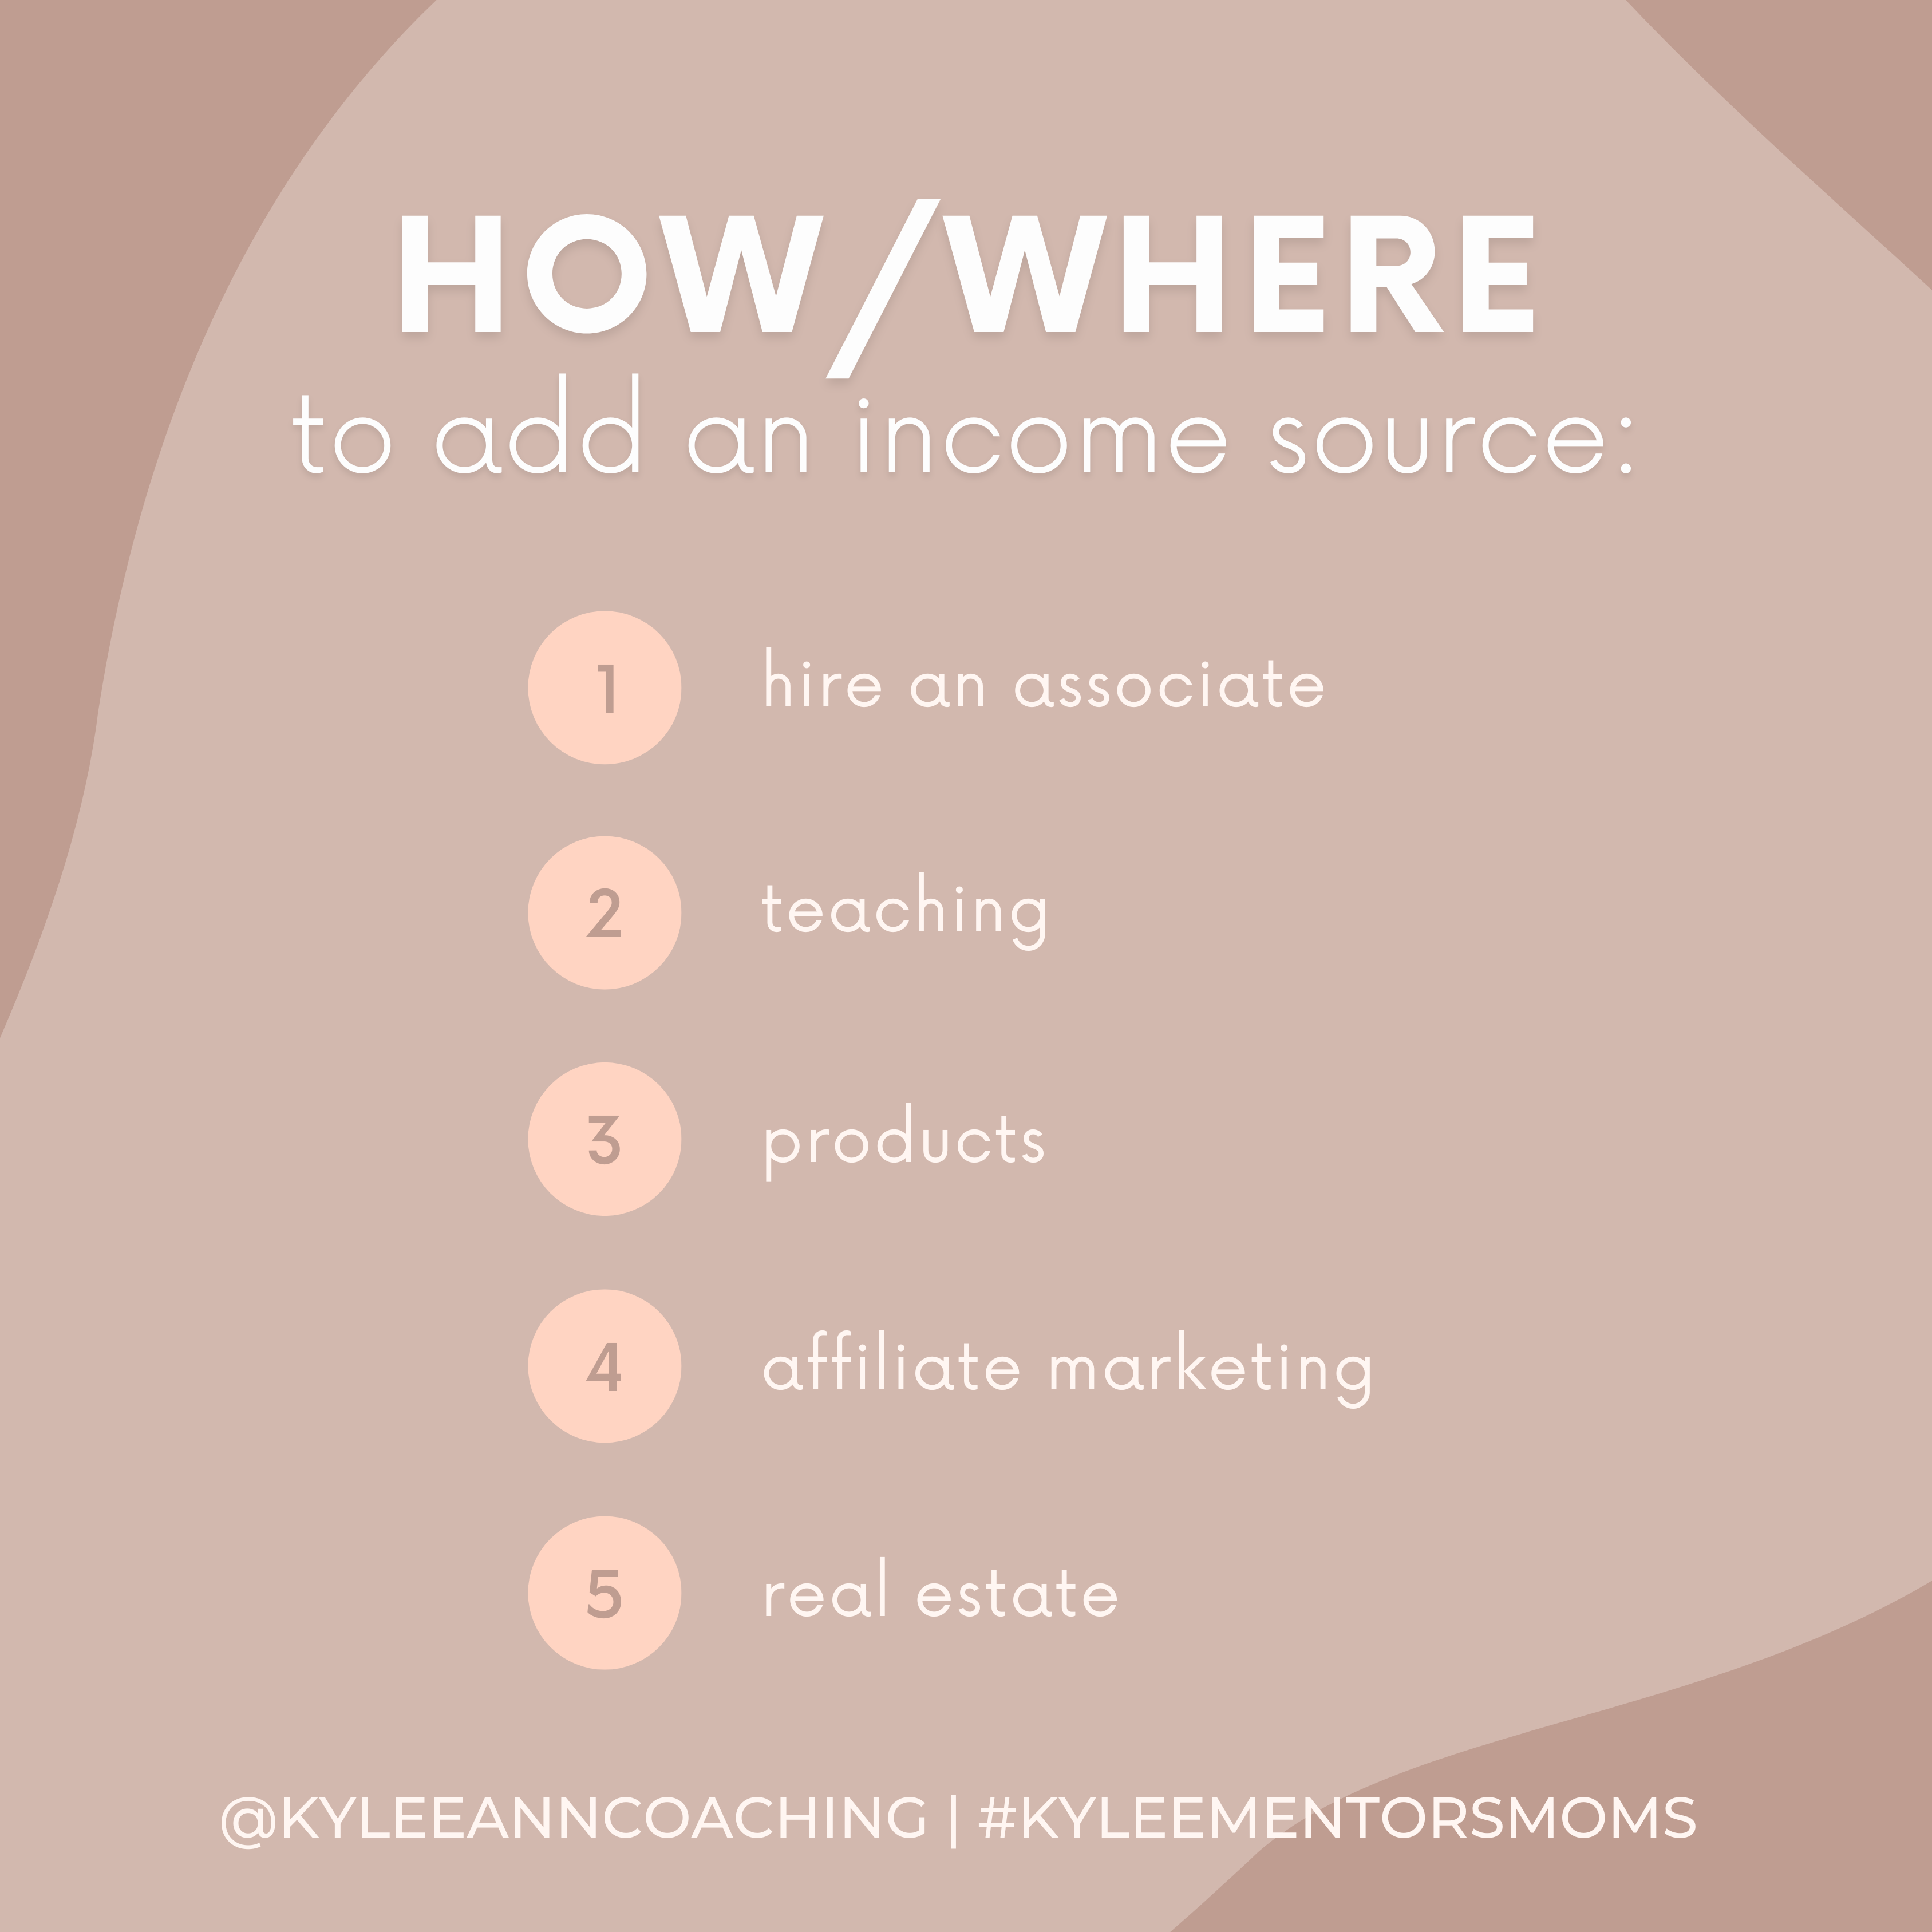 Add An Income Source